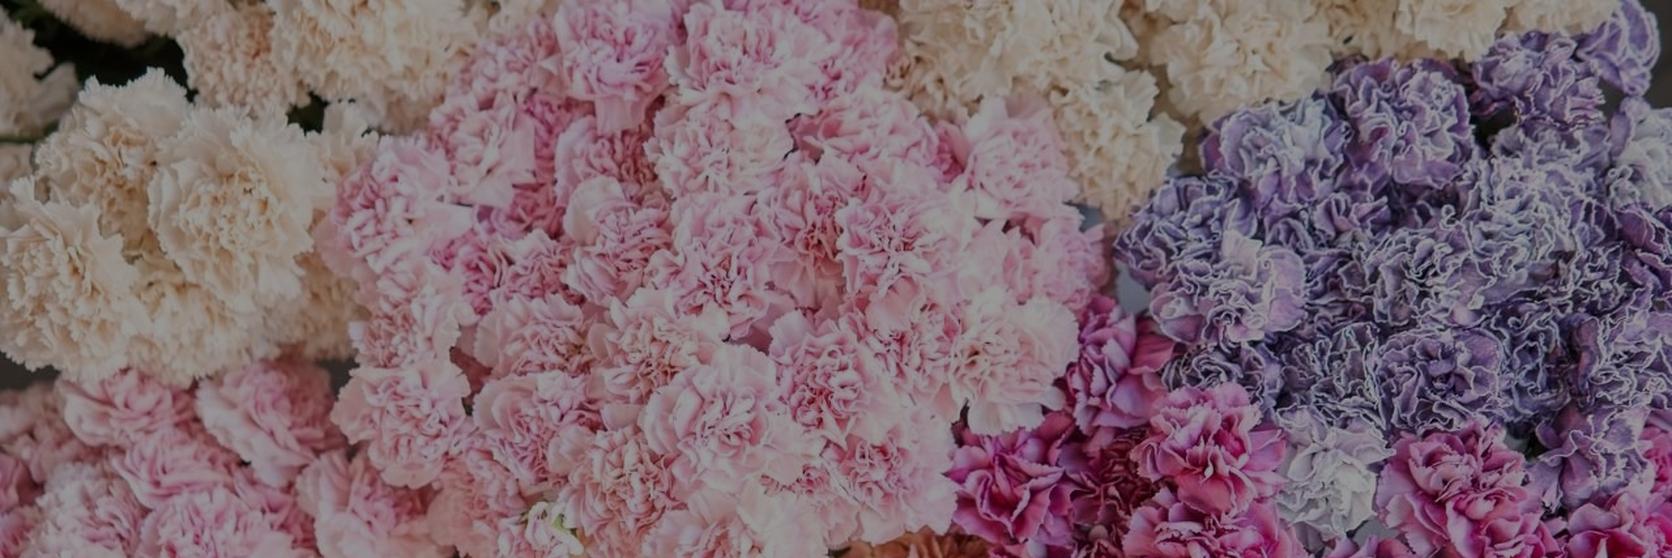 carnations-multicoloured-pastel-flowers